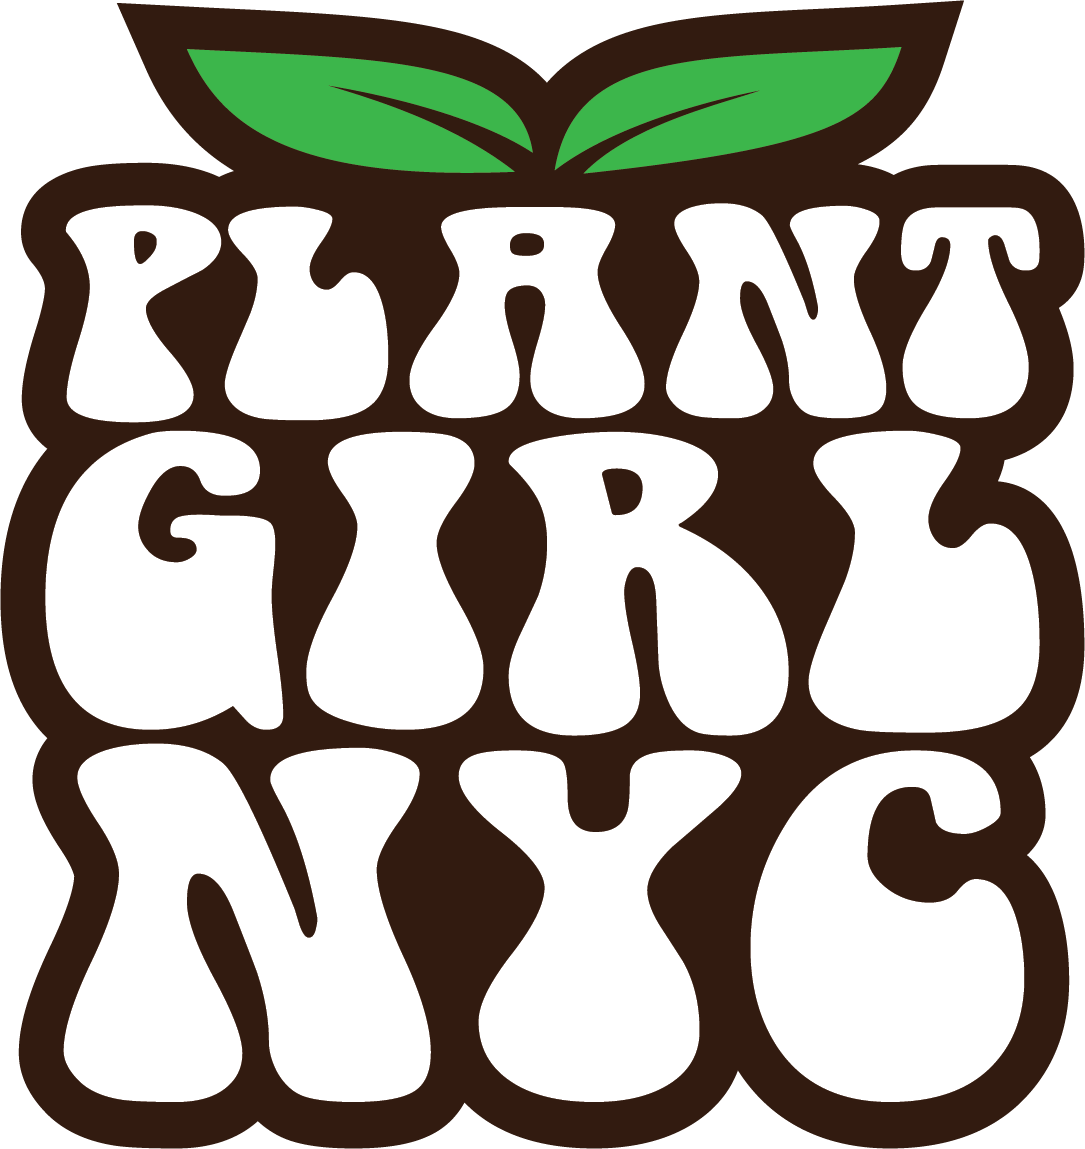 PLANT GIRL NYC